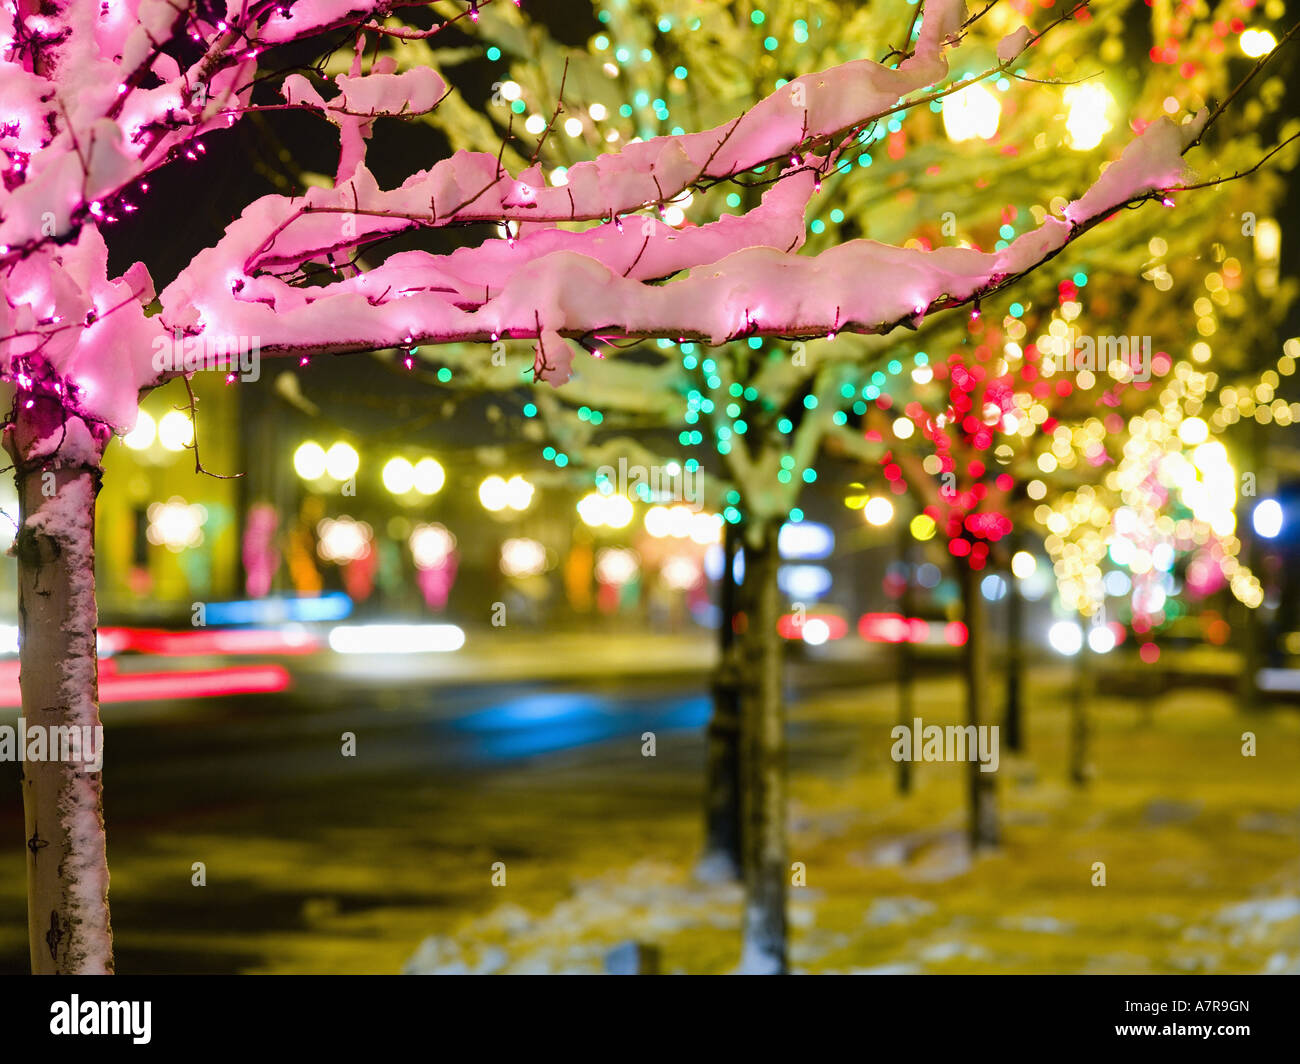 Christmas lights on trees outdoors Stock Photo